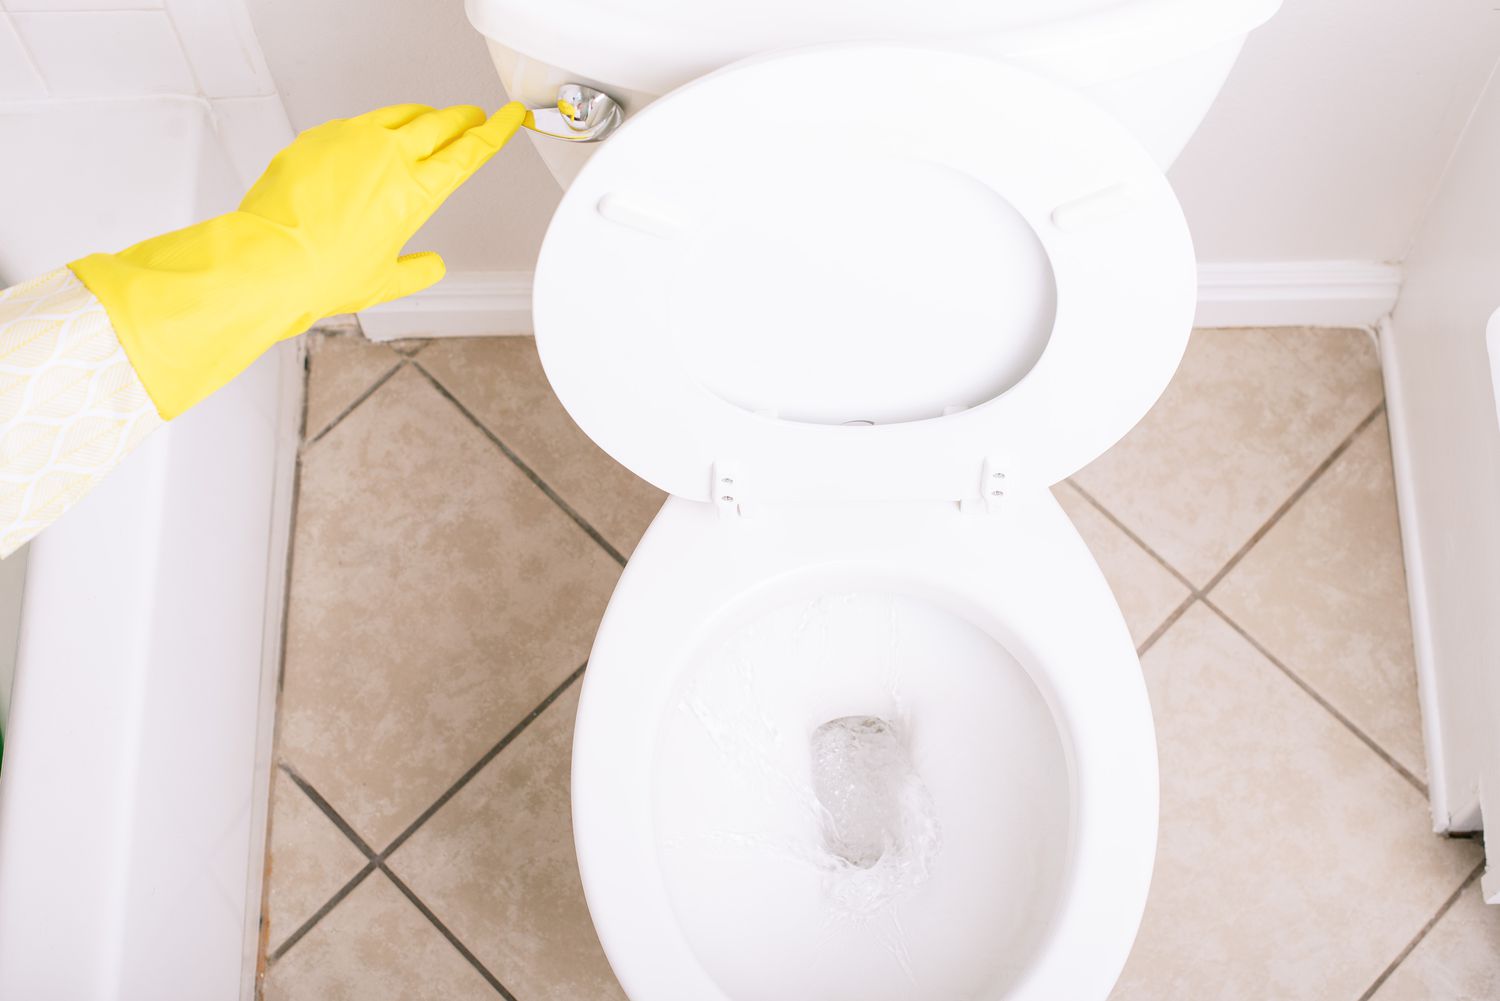 Vaso sanitário de cerâmica branca recebendo descarga manual com luvas amarelas